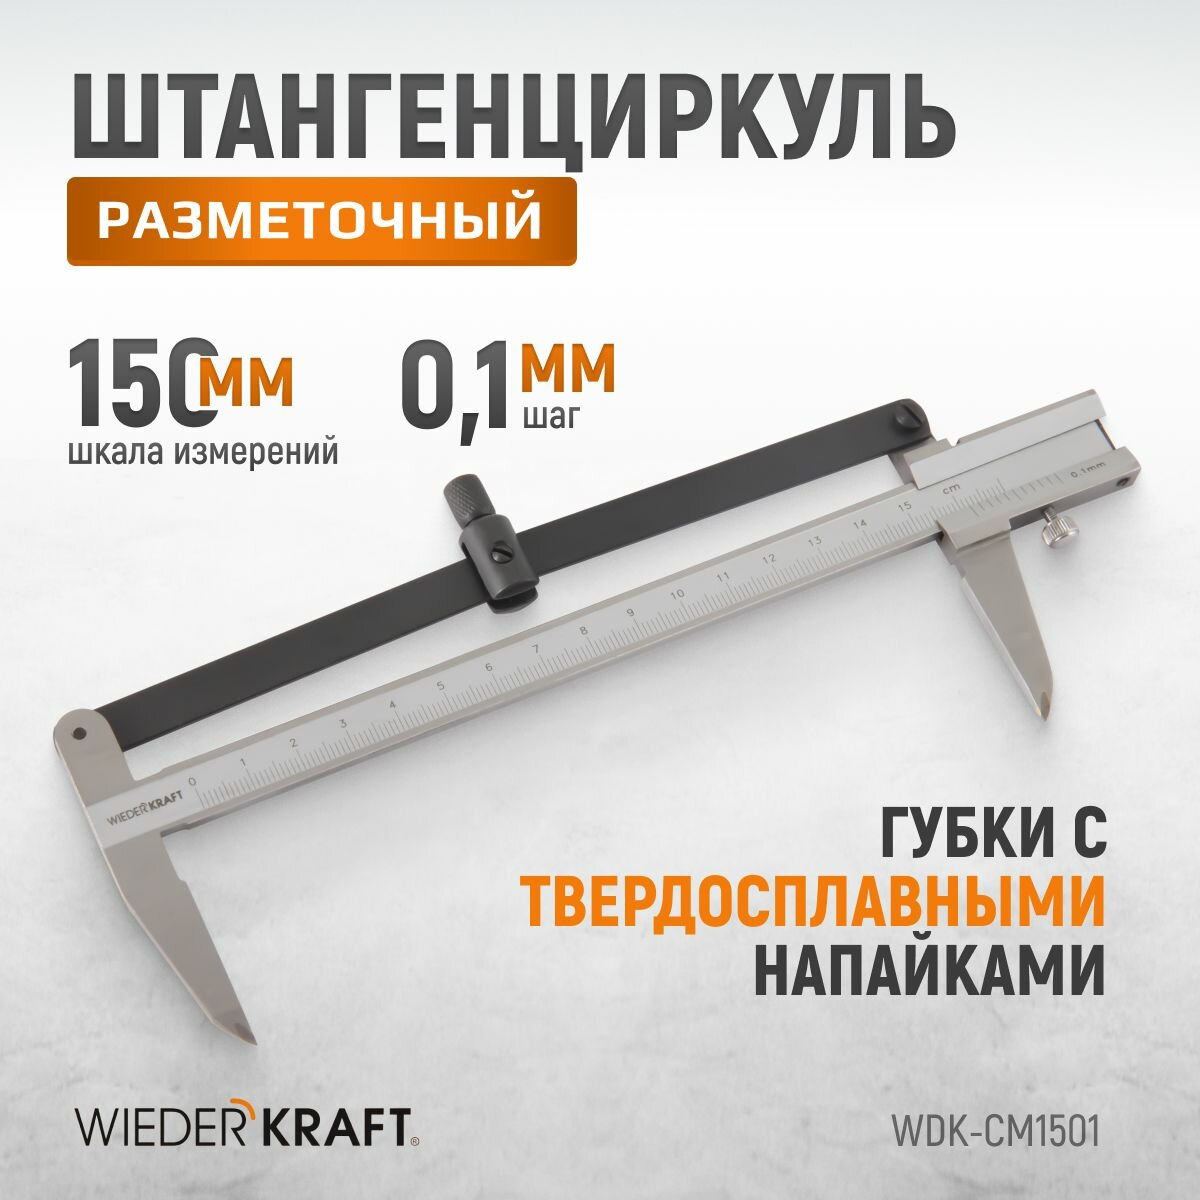 Штангенциркуль WIEDERKRAFT разметочный 150 мм, 0,1 мм WDK-CM1501